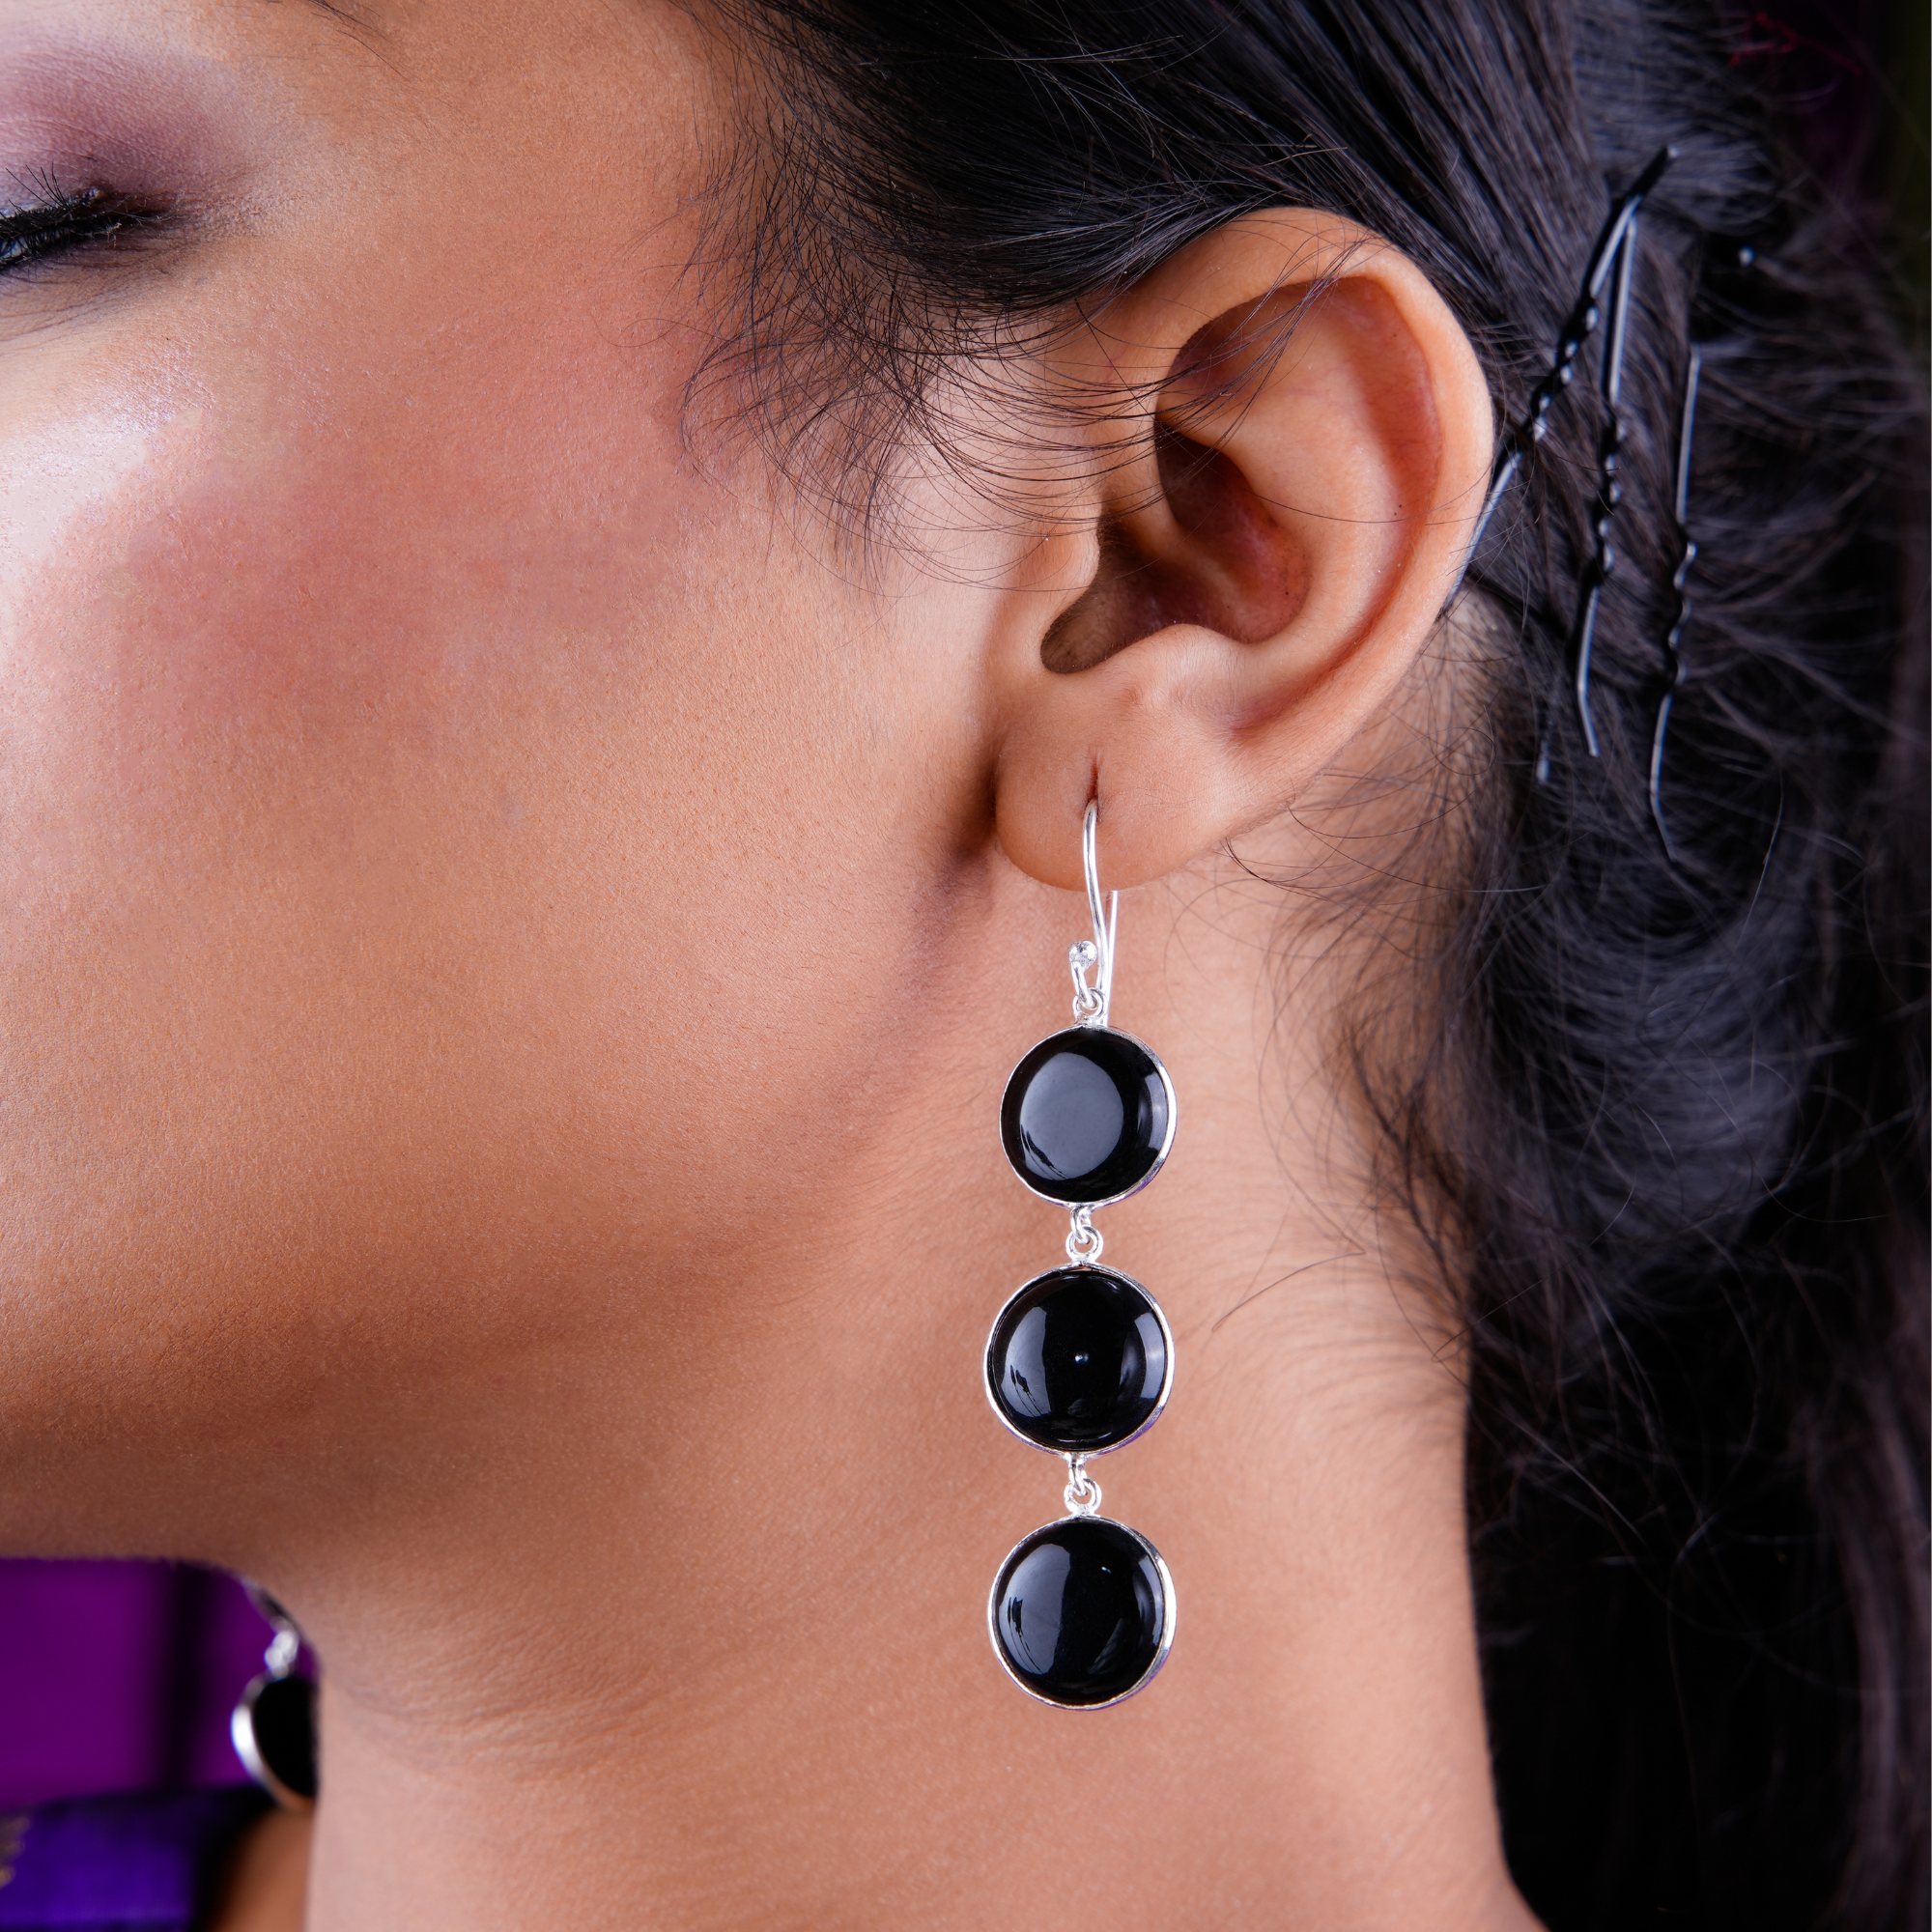 Vintage Glamour Chandeliers earrings